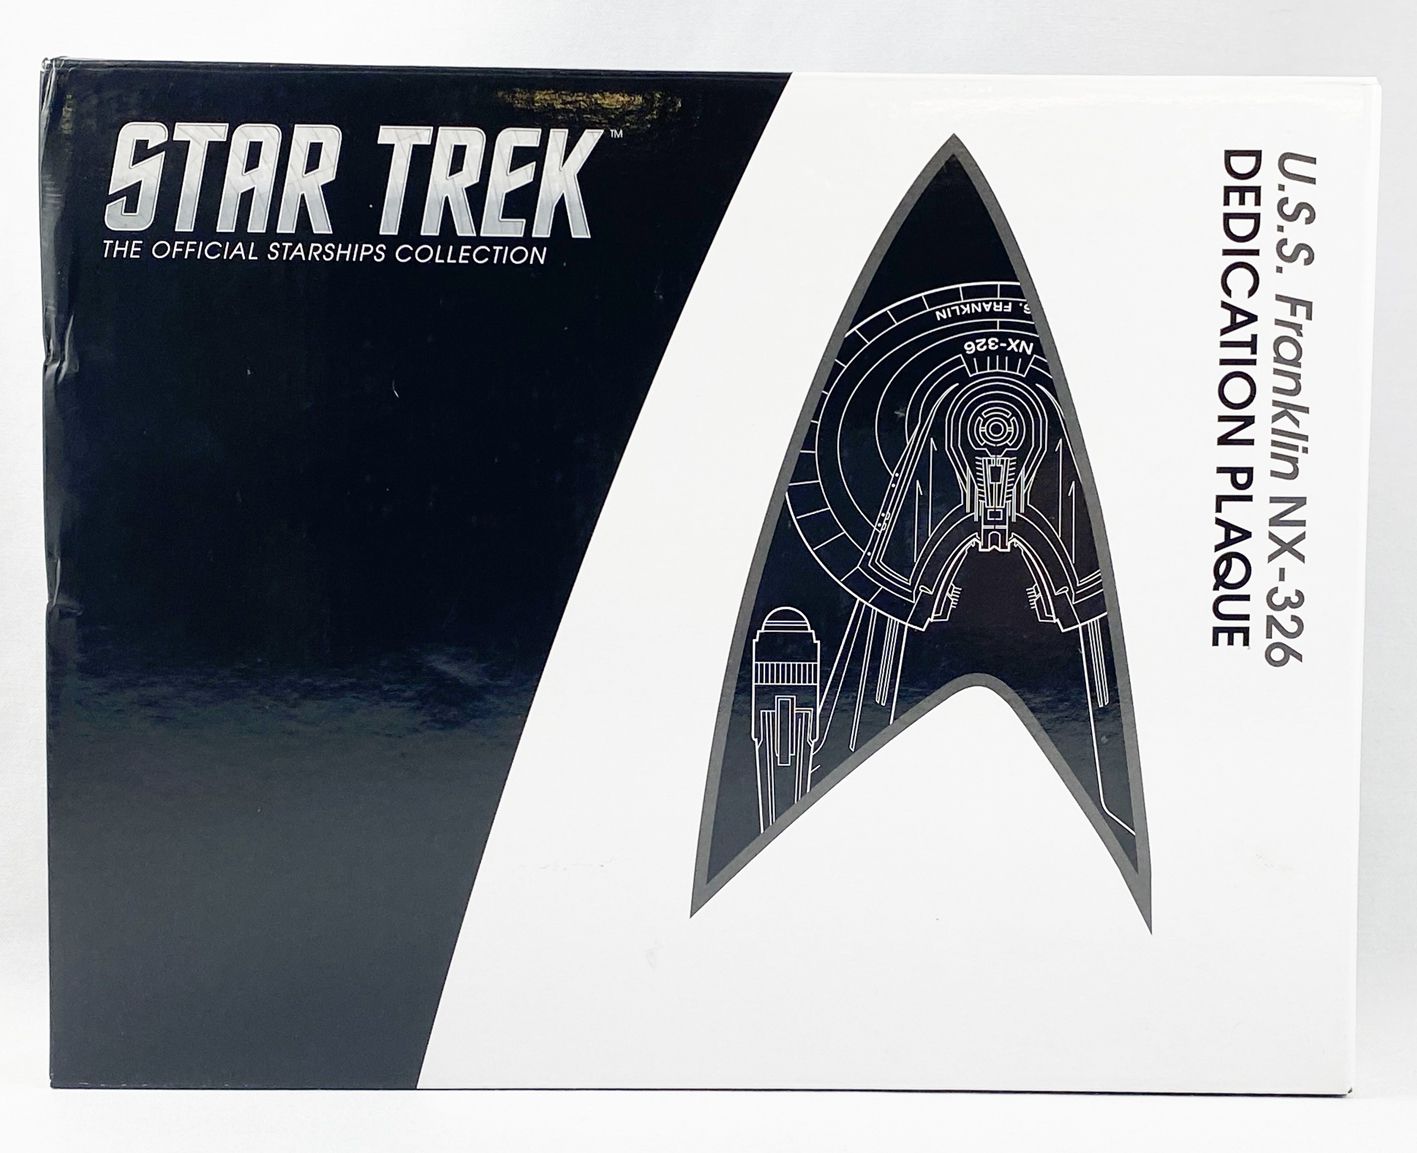 Franklin NX-326 Eaglemoss metallic resin Star Trek Dedication Plaque U.S.S 